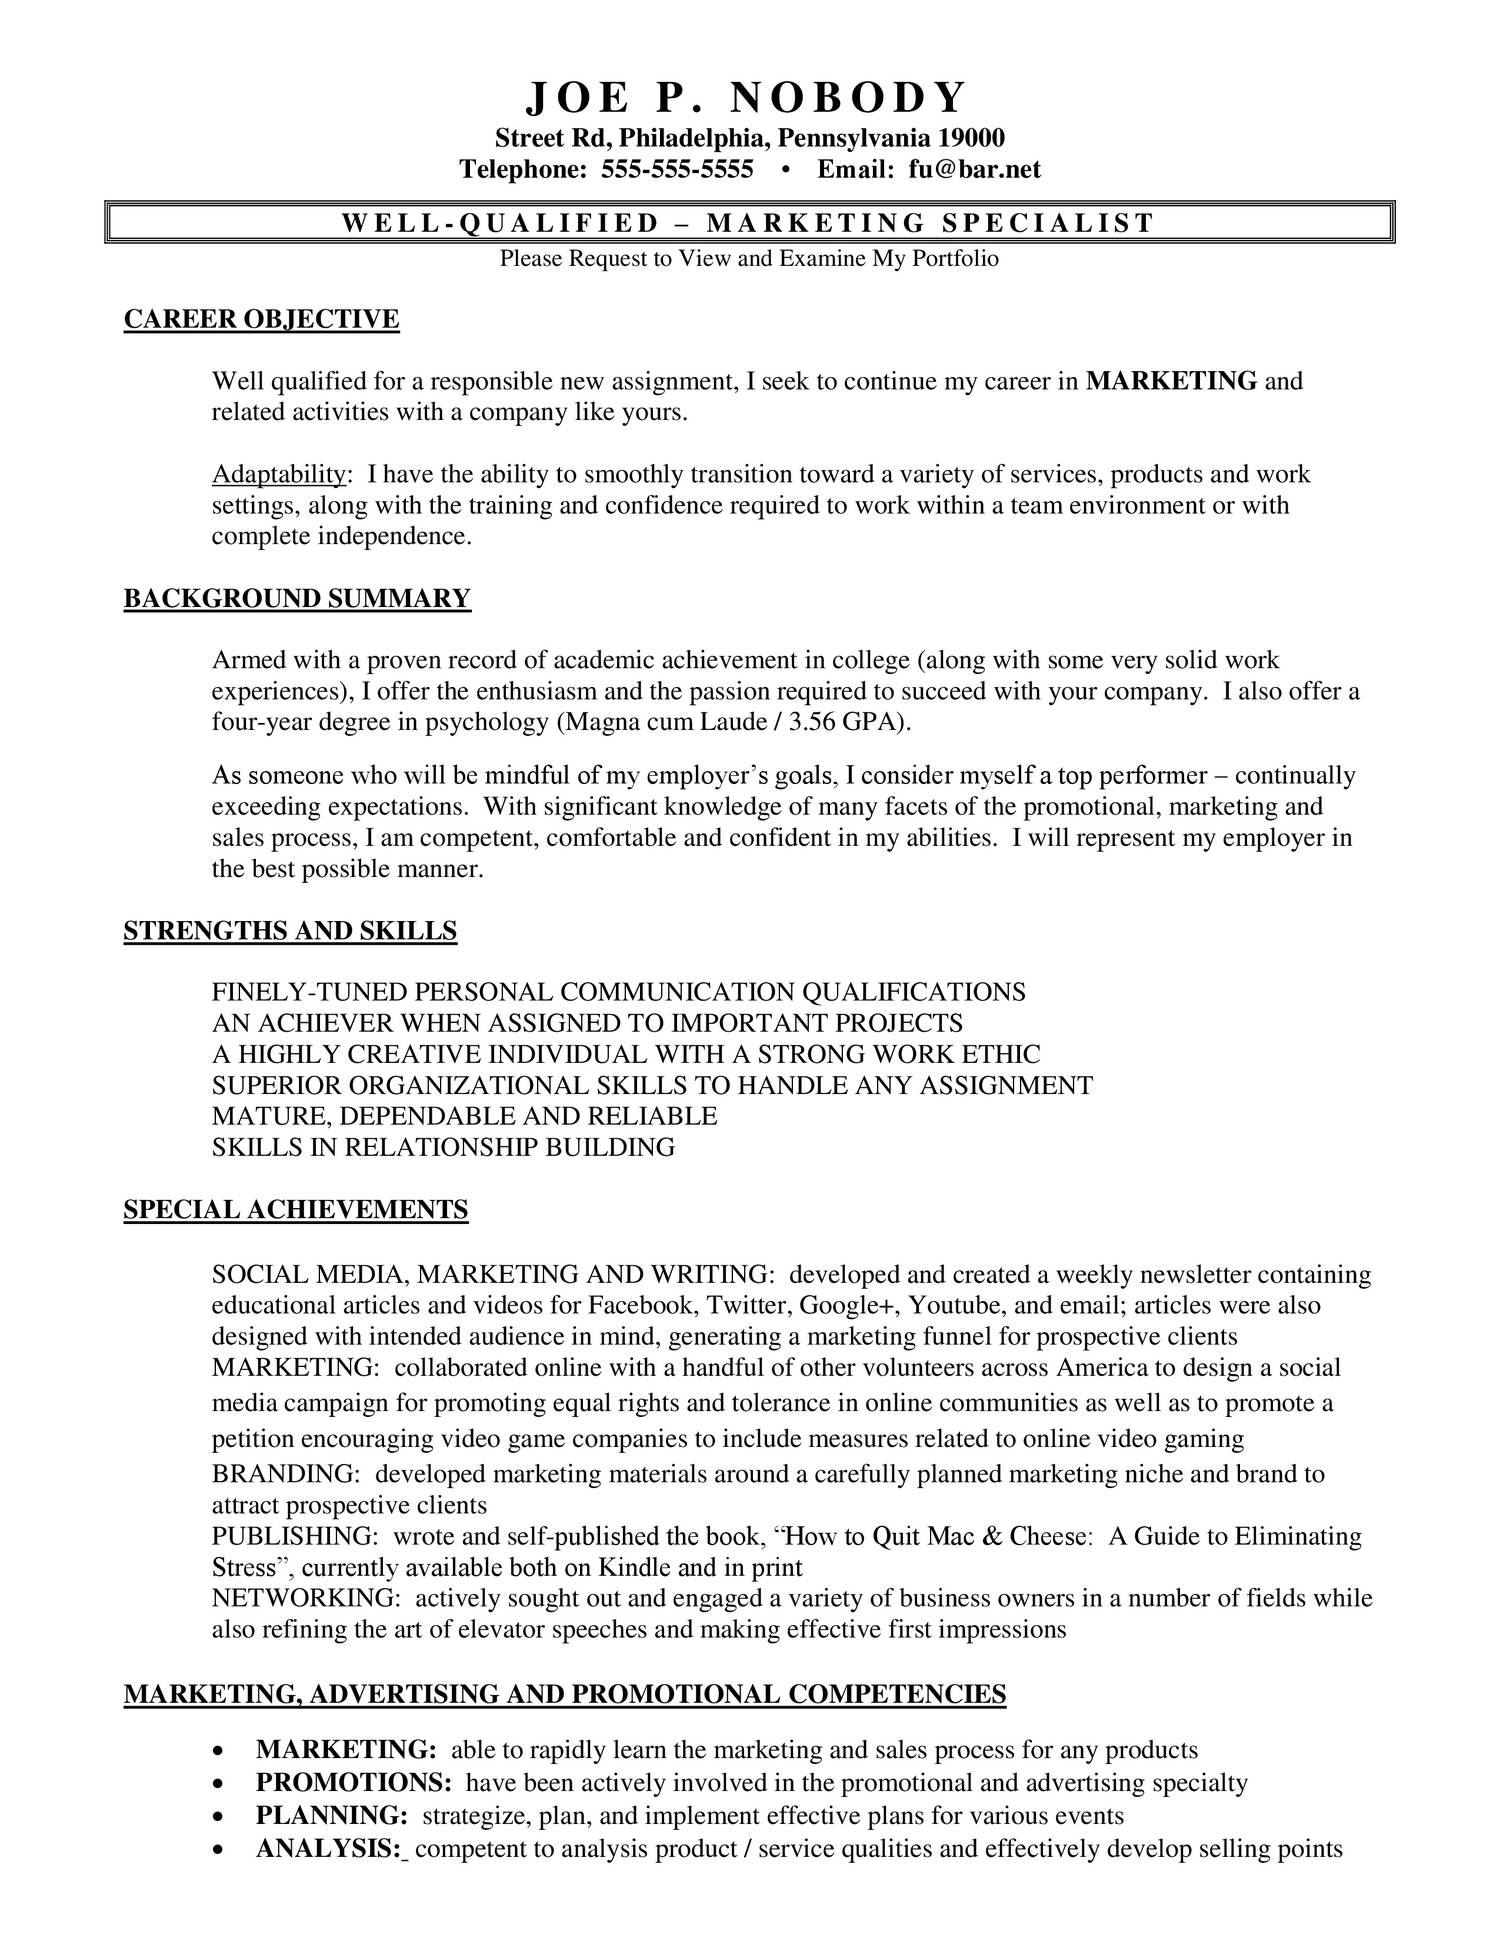 resume template reddit